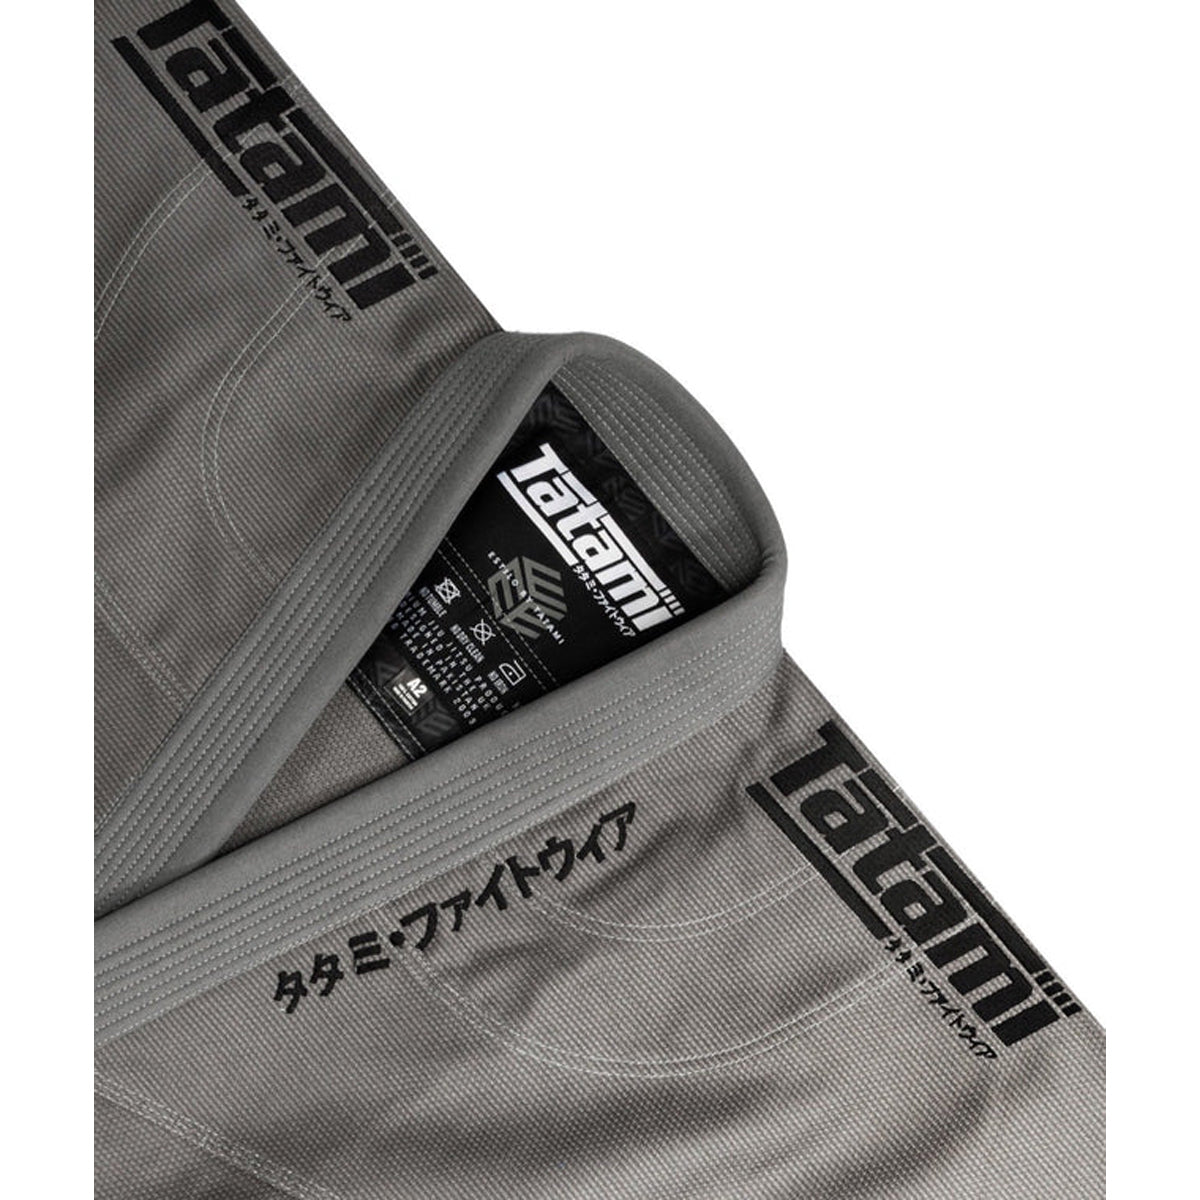 Tatami Fightwear Estilo Black Label BJJ Gi - Black/Gray Tatami Fightwear